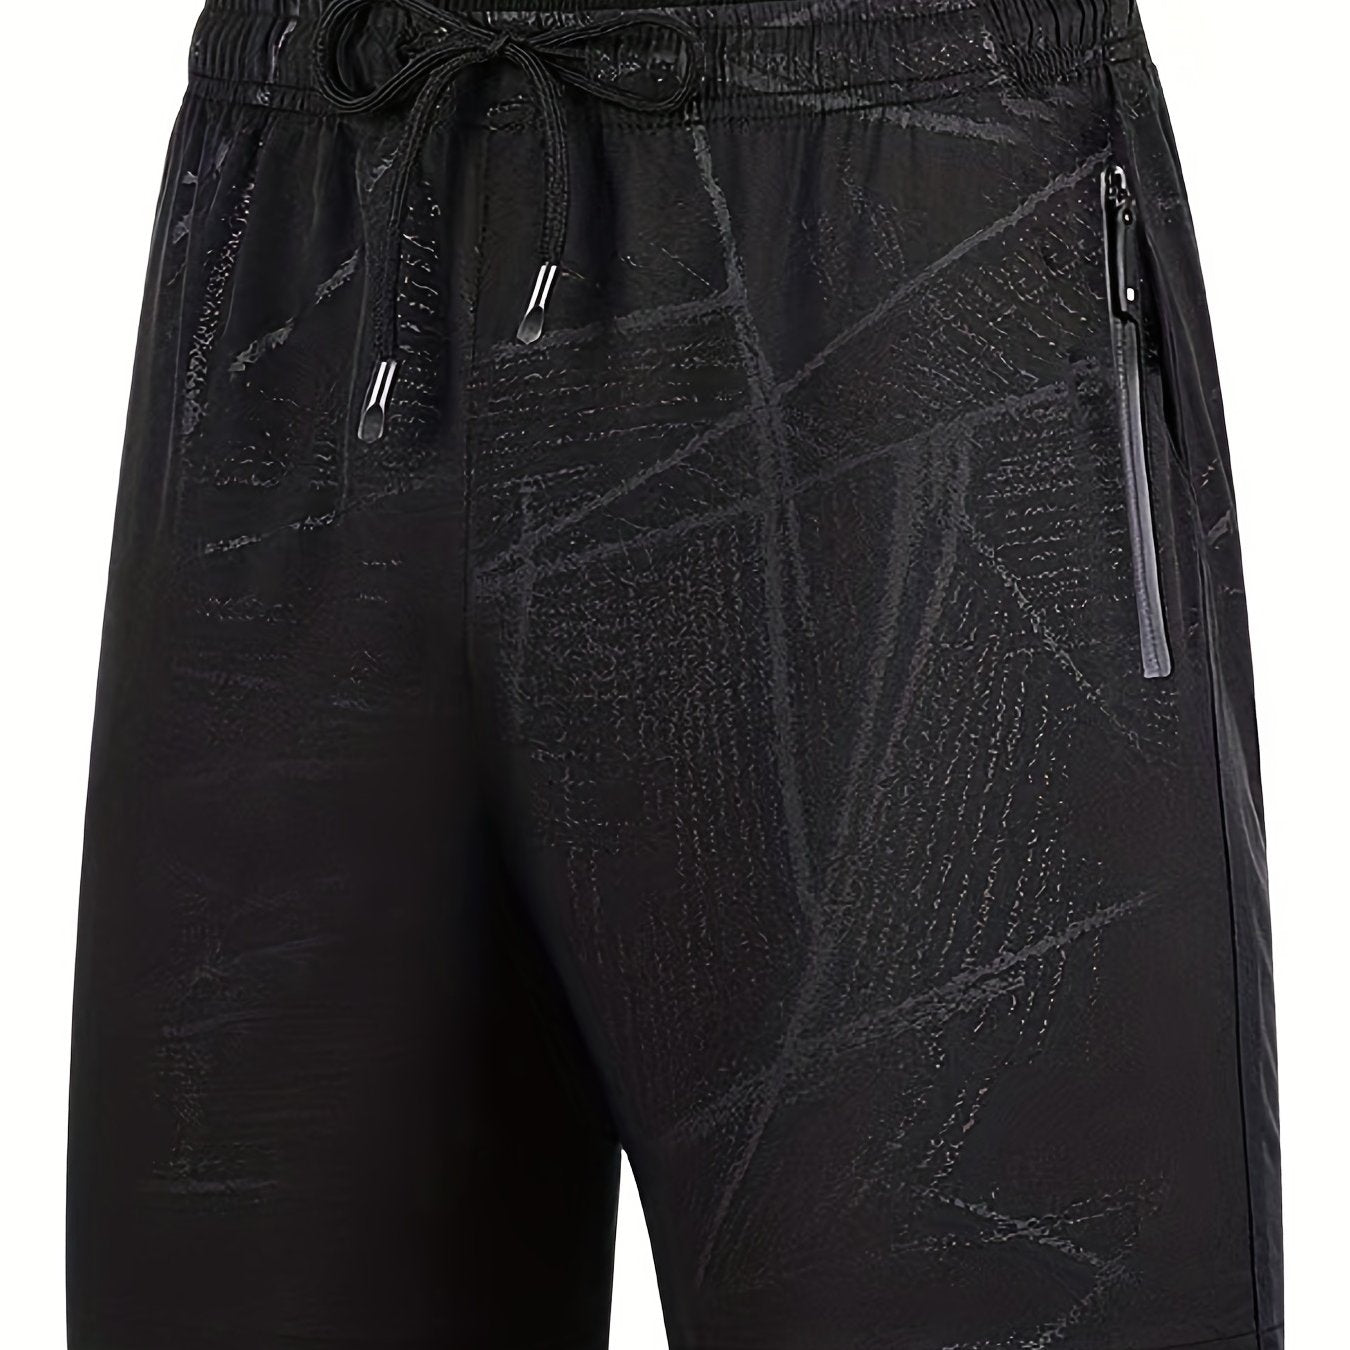 「lovevop」Men's Breathable Shorts With Zipper Pockets, Summer Drawstring Shorts For Running, Fitness, Training